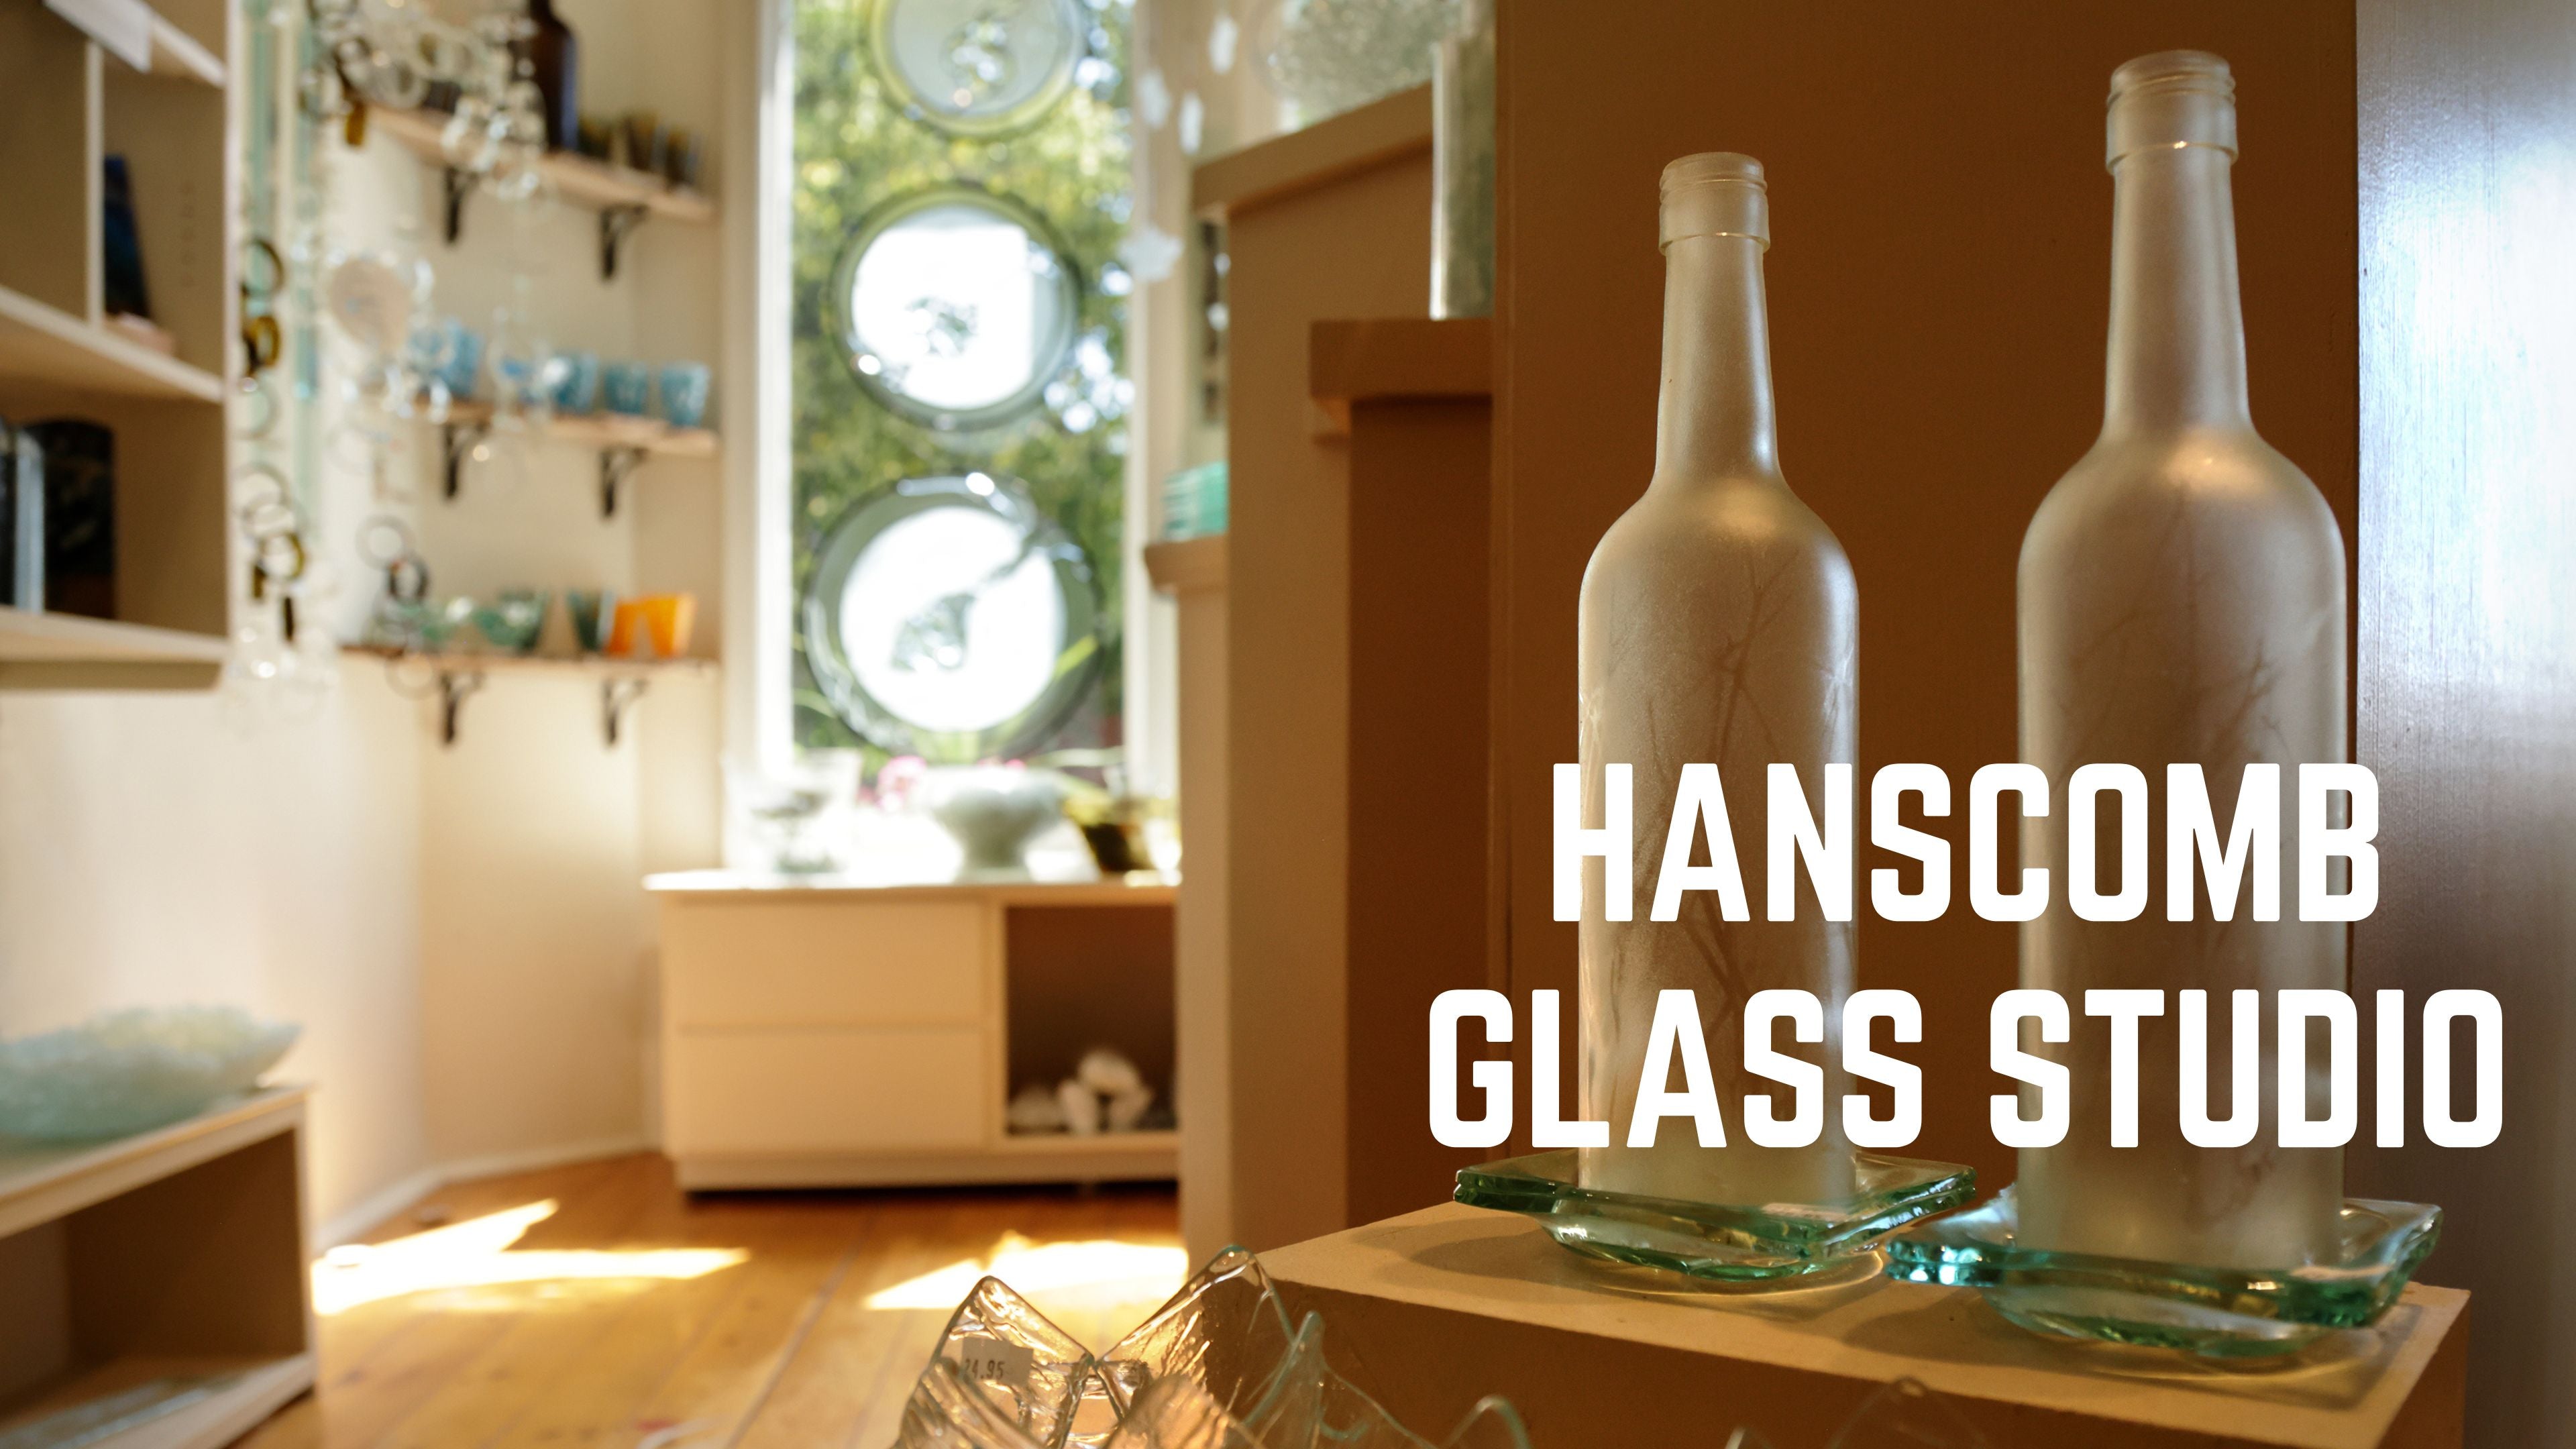 Hanscomb Glass Studio - Modern Stained Glass